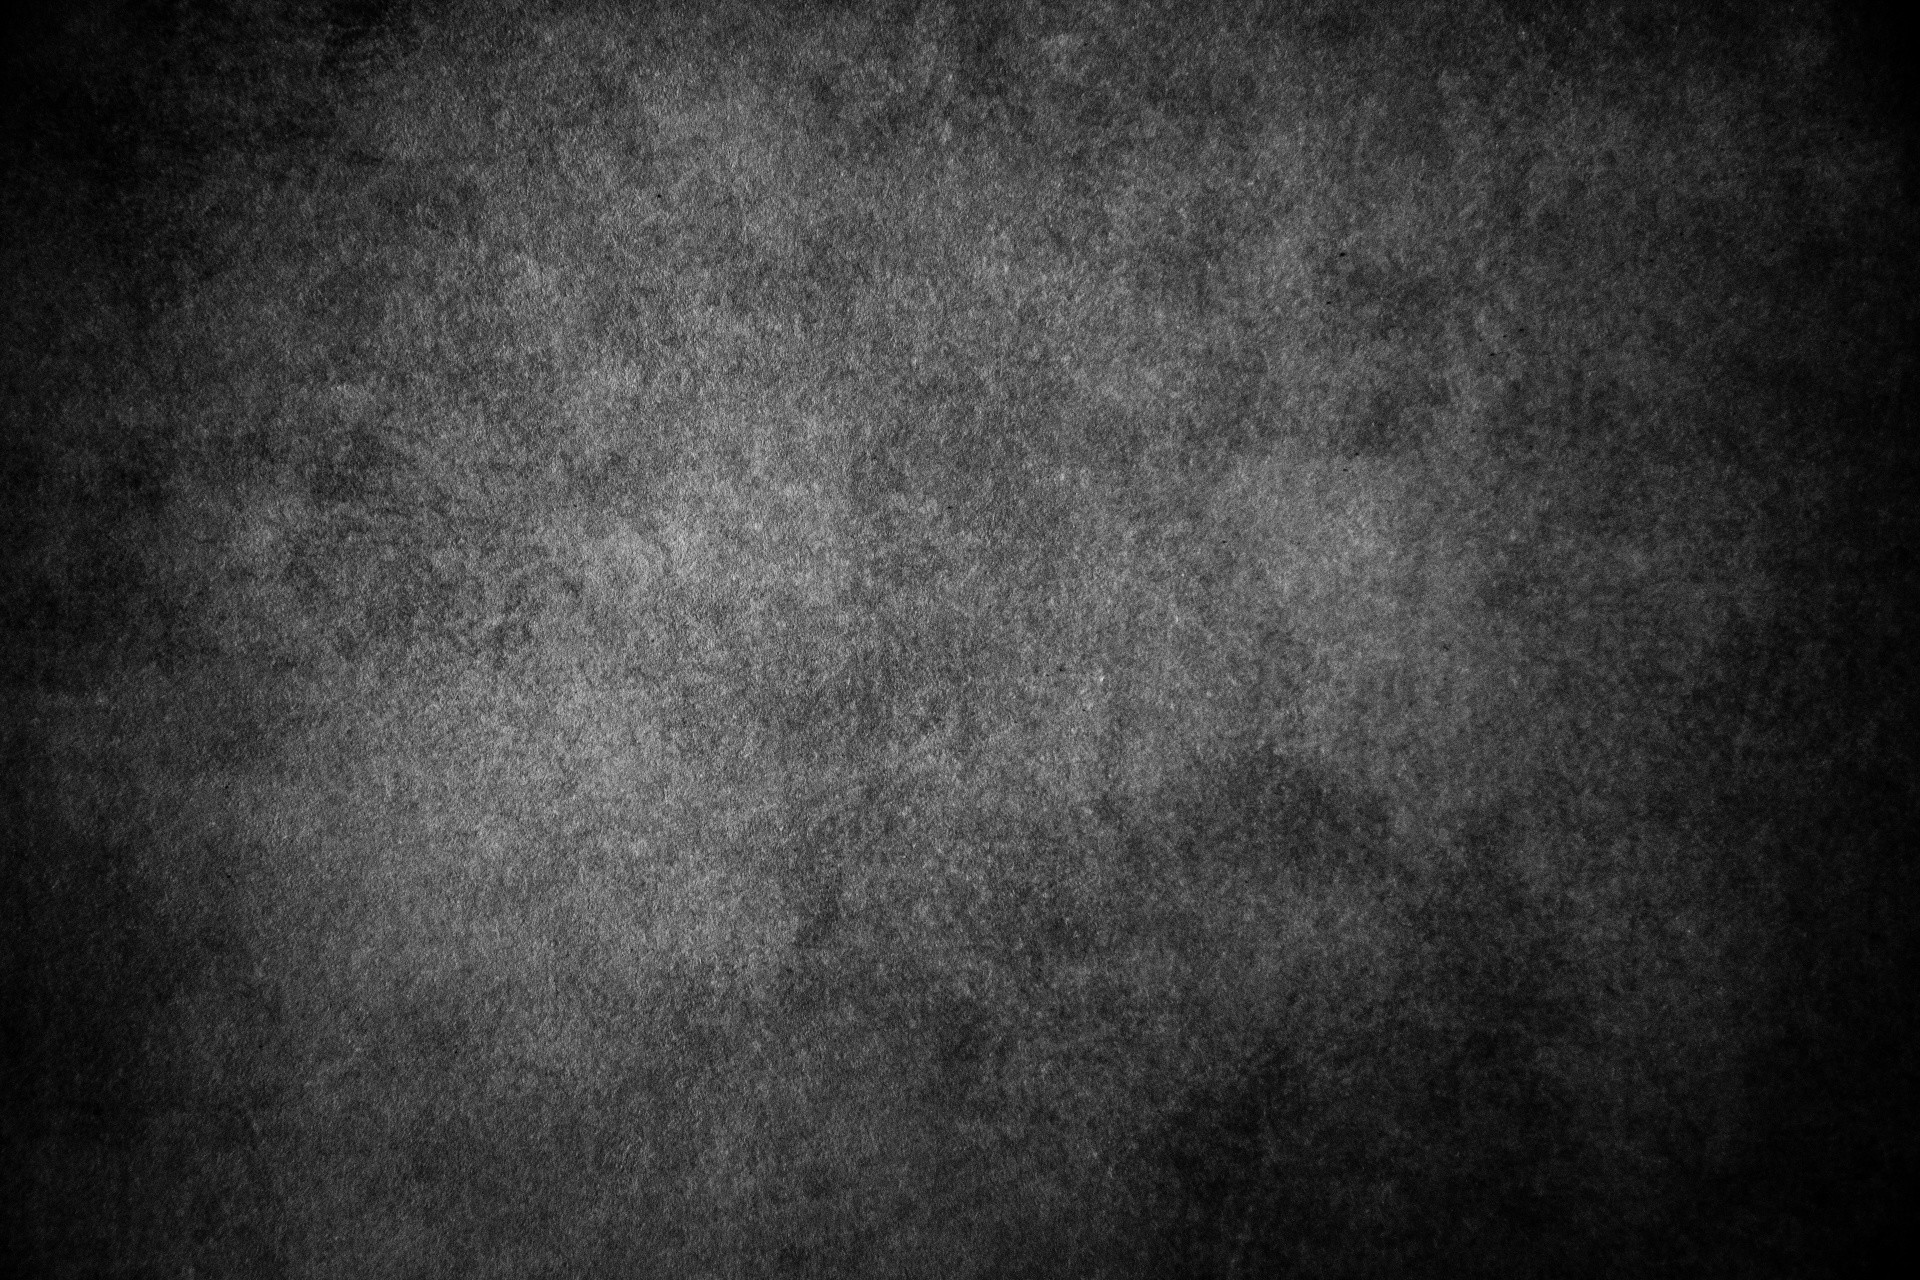 1920x1280 Black HD Grunge Background Image #4354